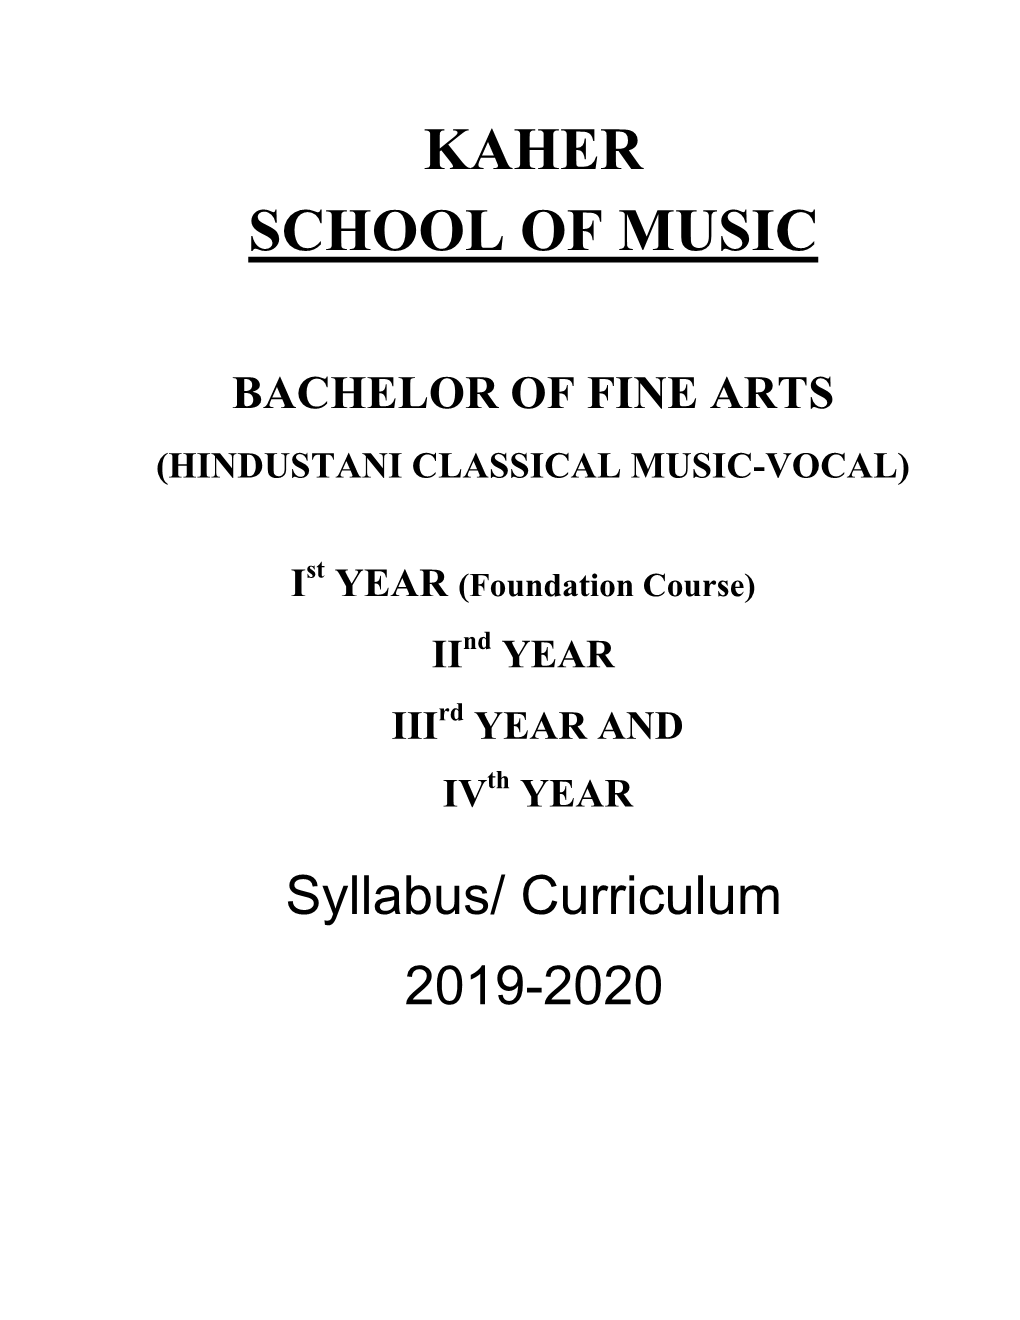 Kaher School of Music